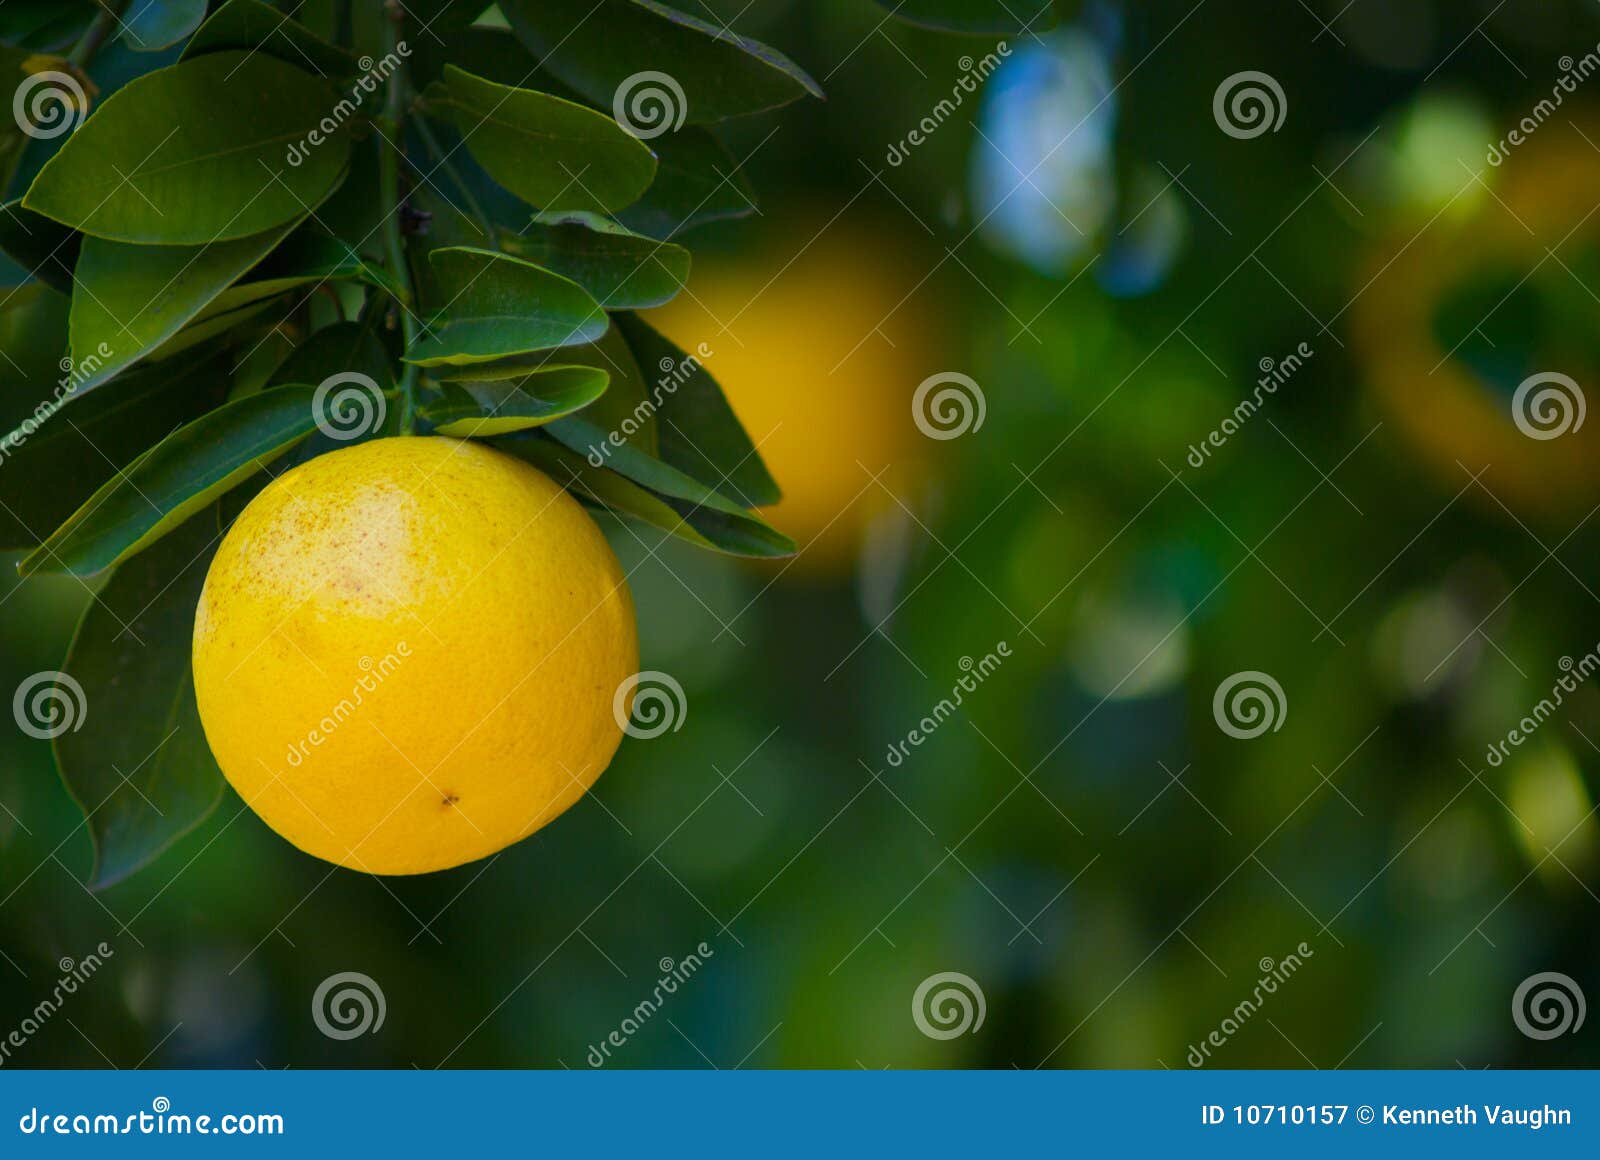 grapefruit on tree